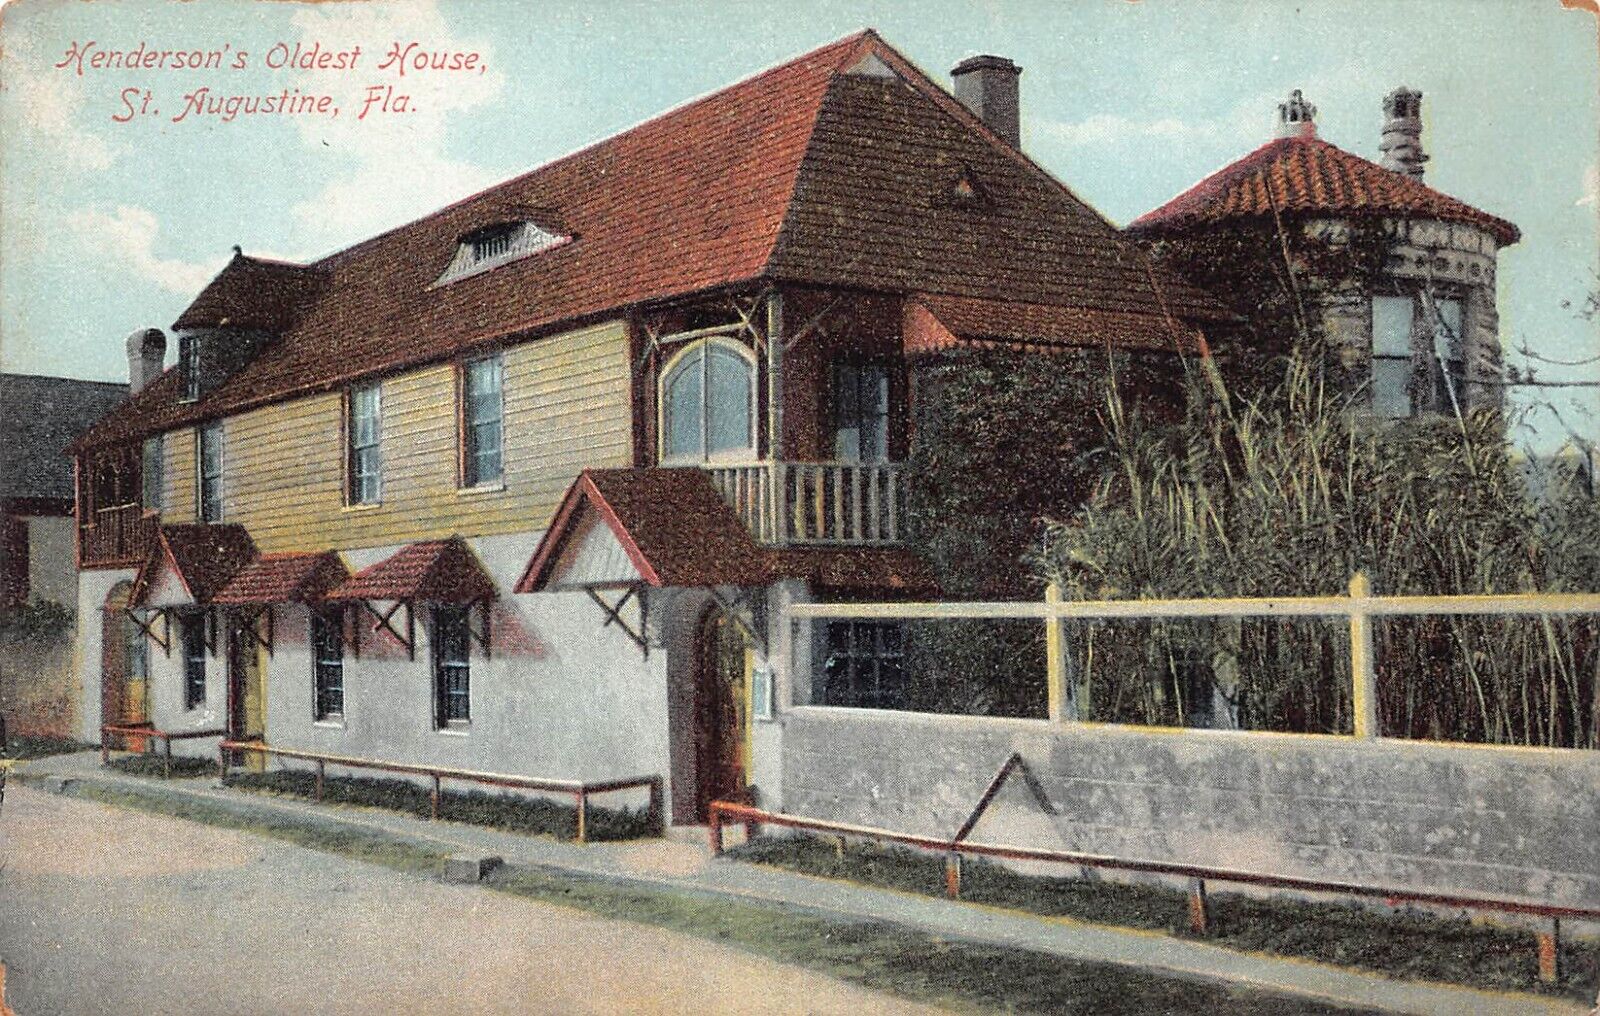 Florida FL Vintage Postcard St Augustine Street View Henderson\'s Oldest House